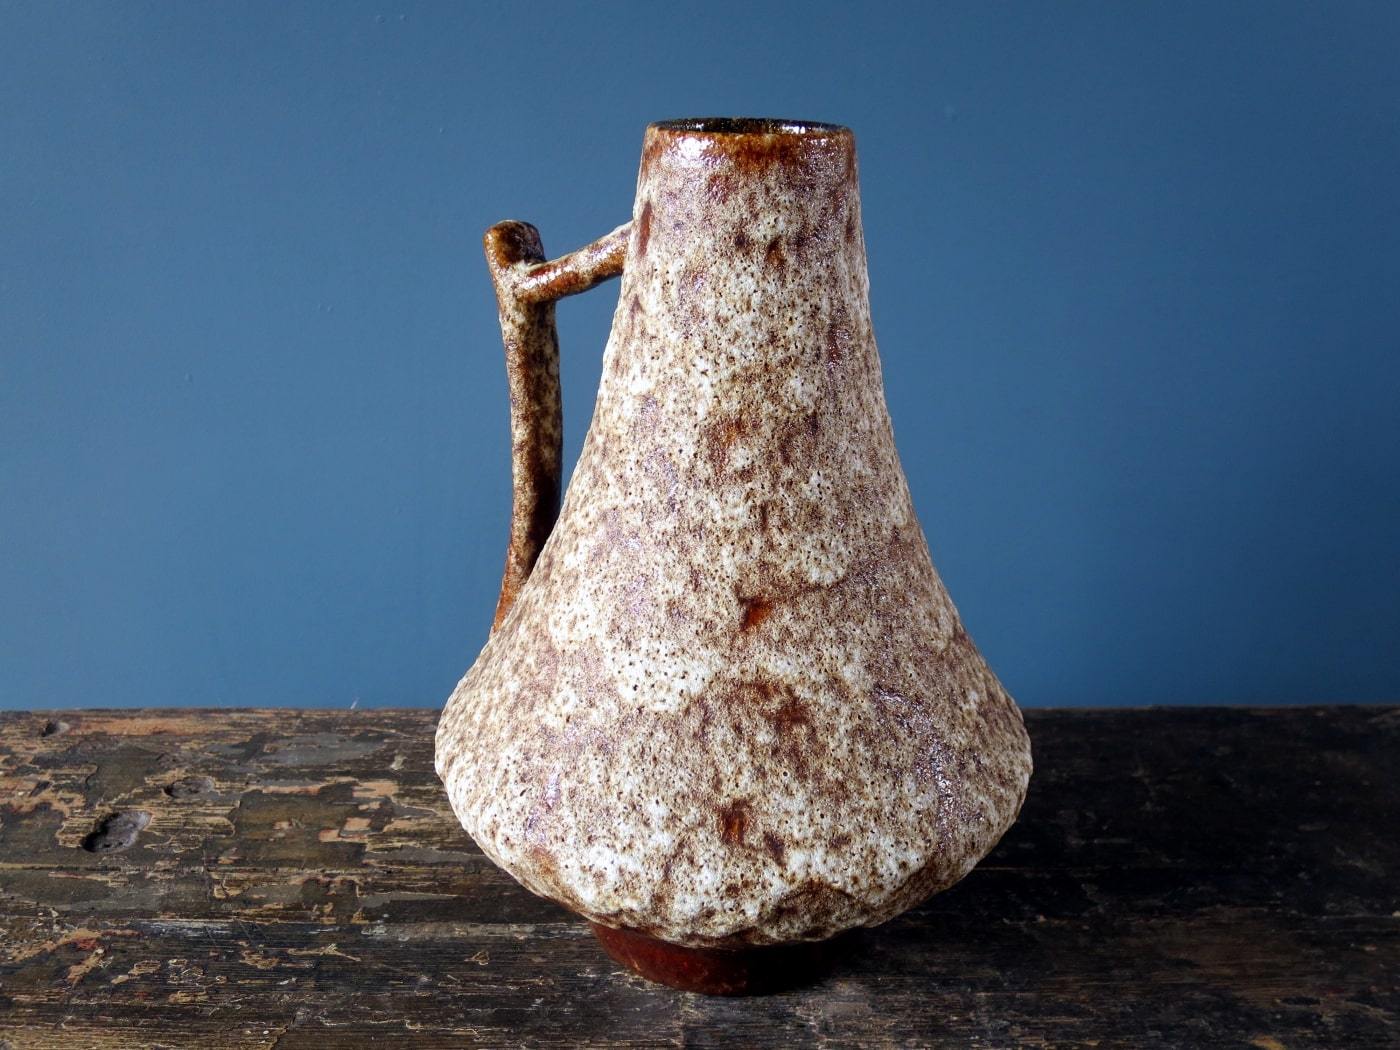 Volcanic drip glaze West German Pottery Stein Keramik jug/vase 44-25